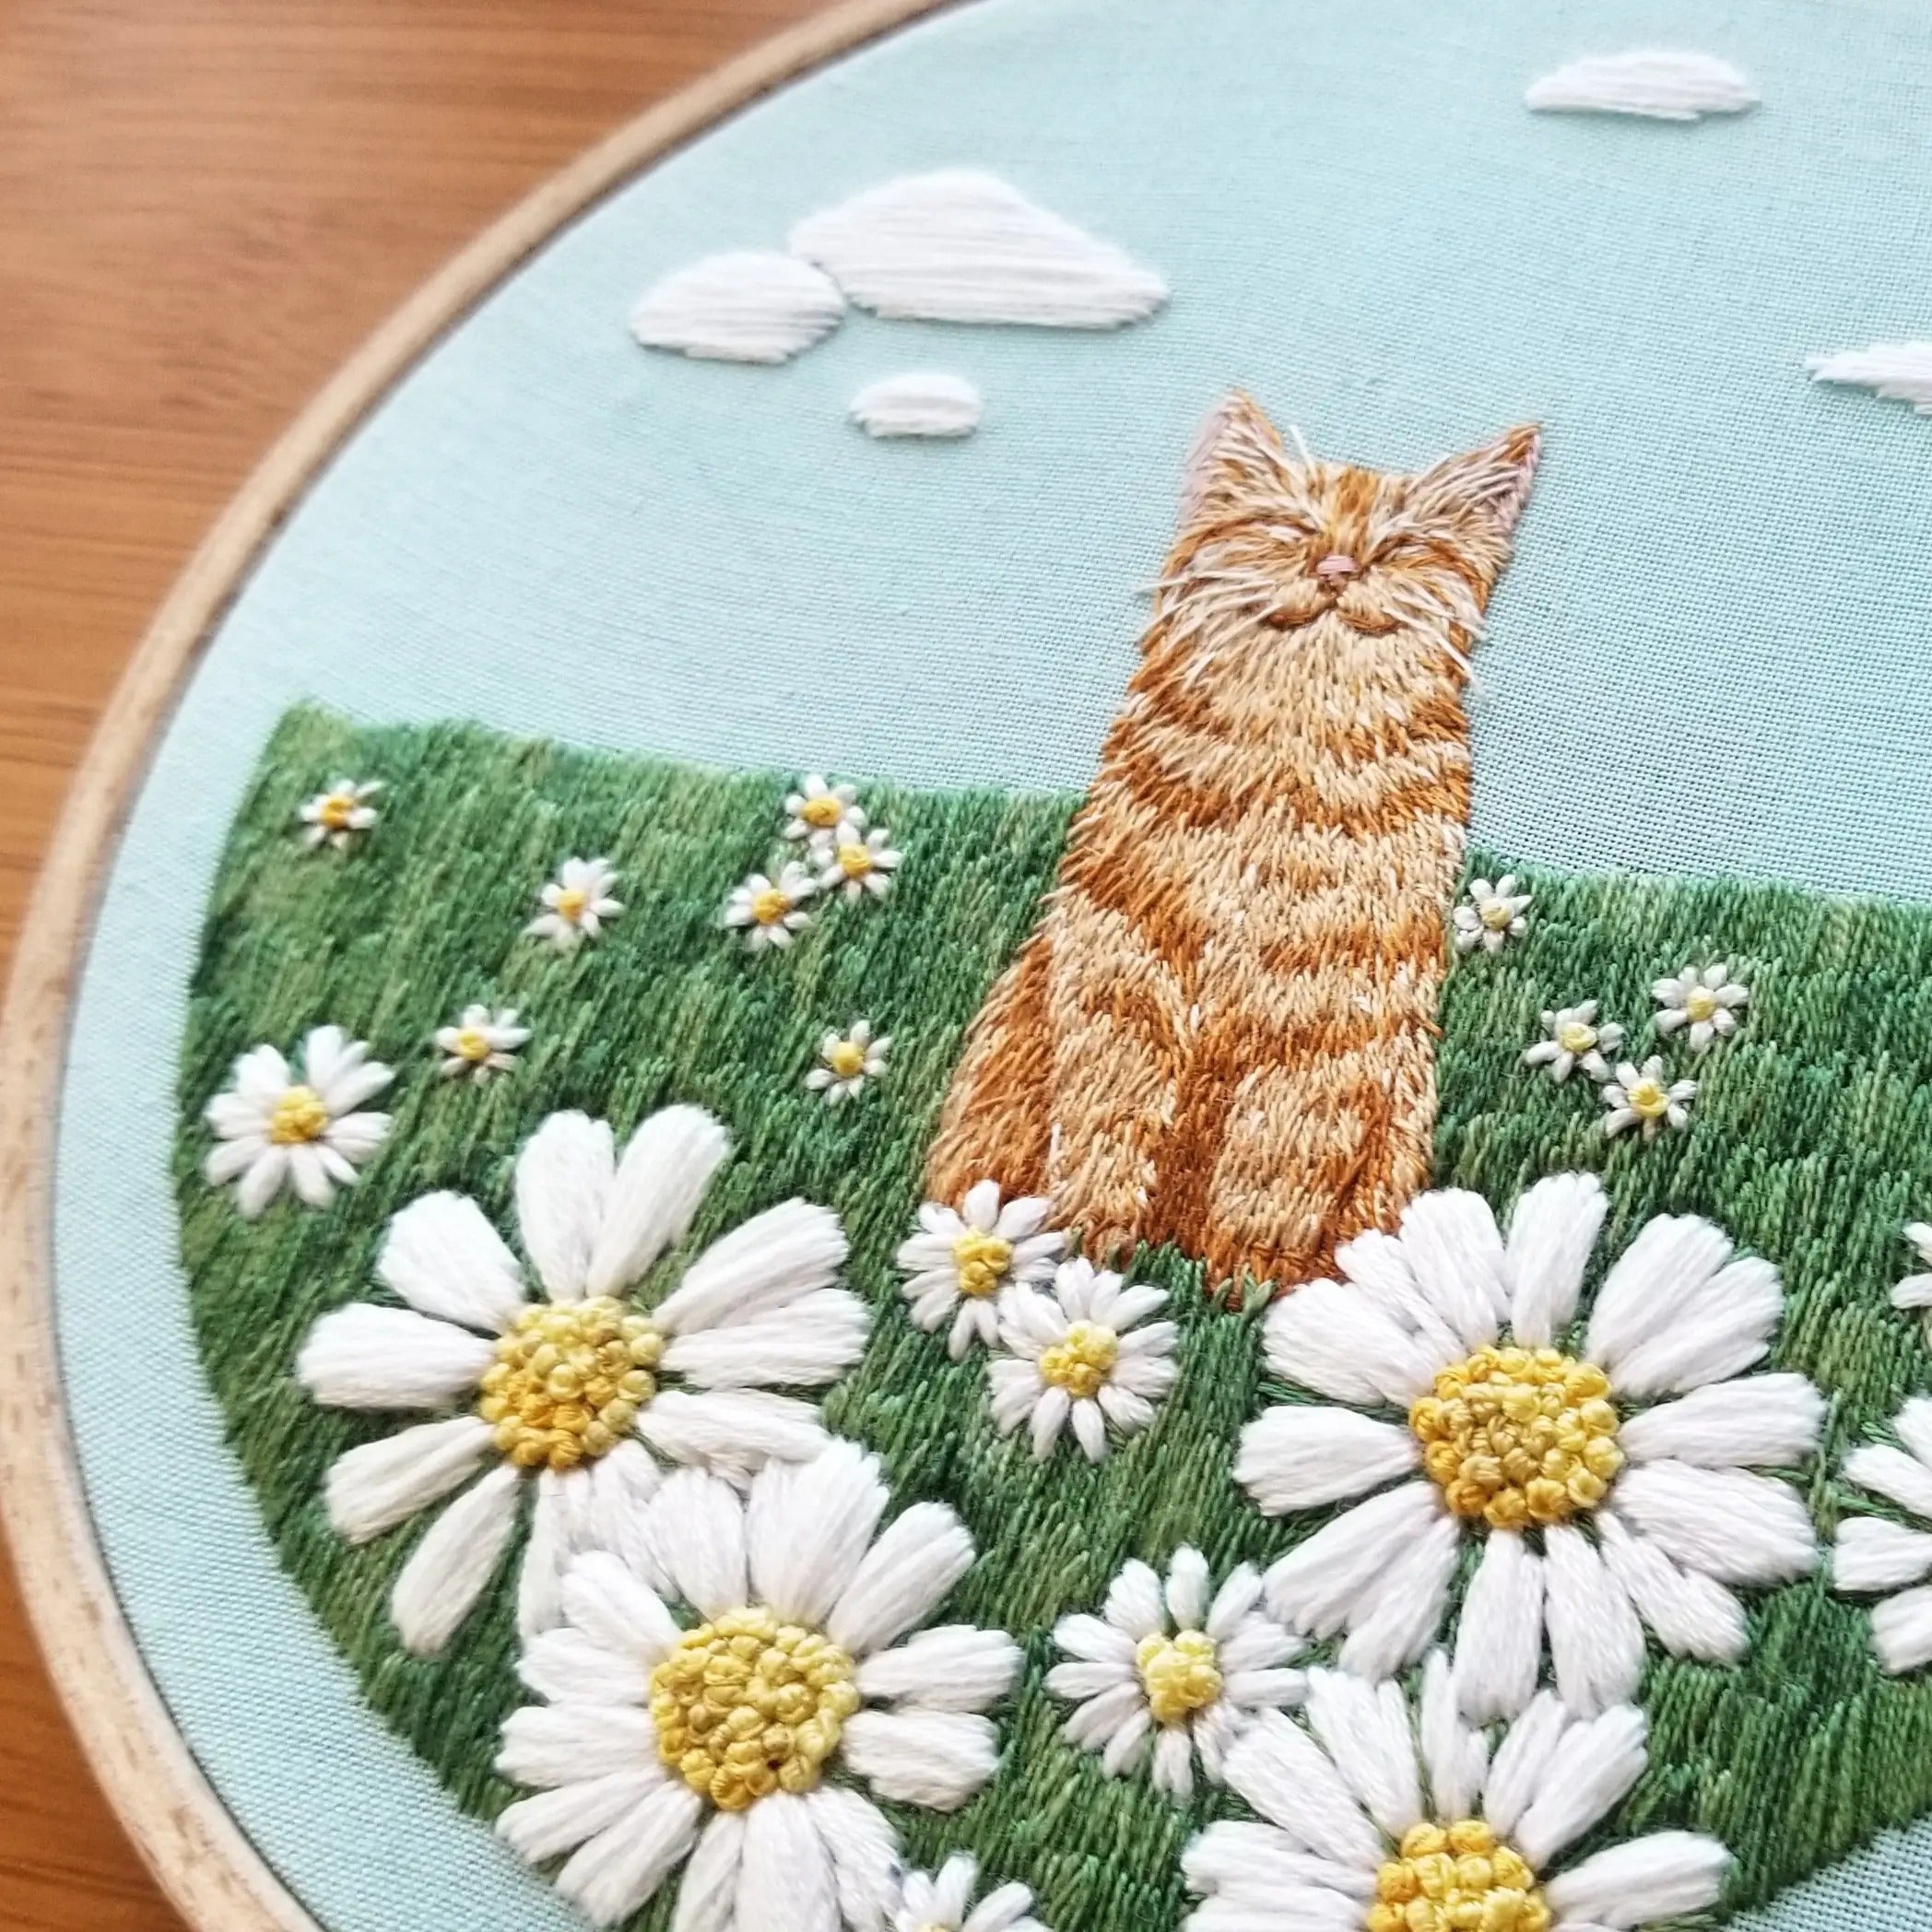 KIT215 Intermediate Embroidery Kit, Cat couple in chrysanthemum